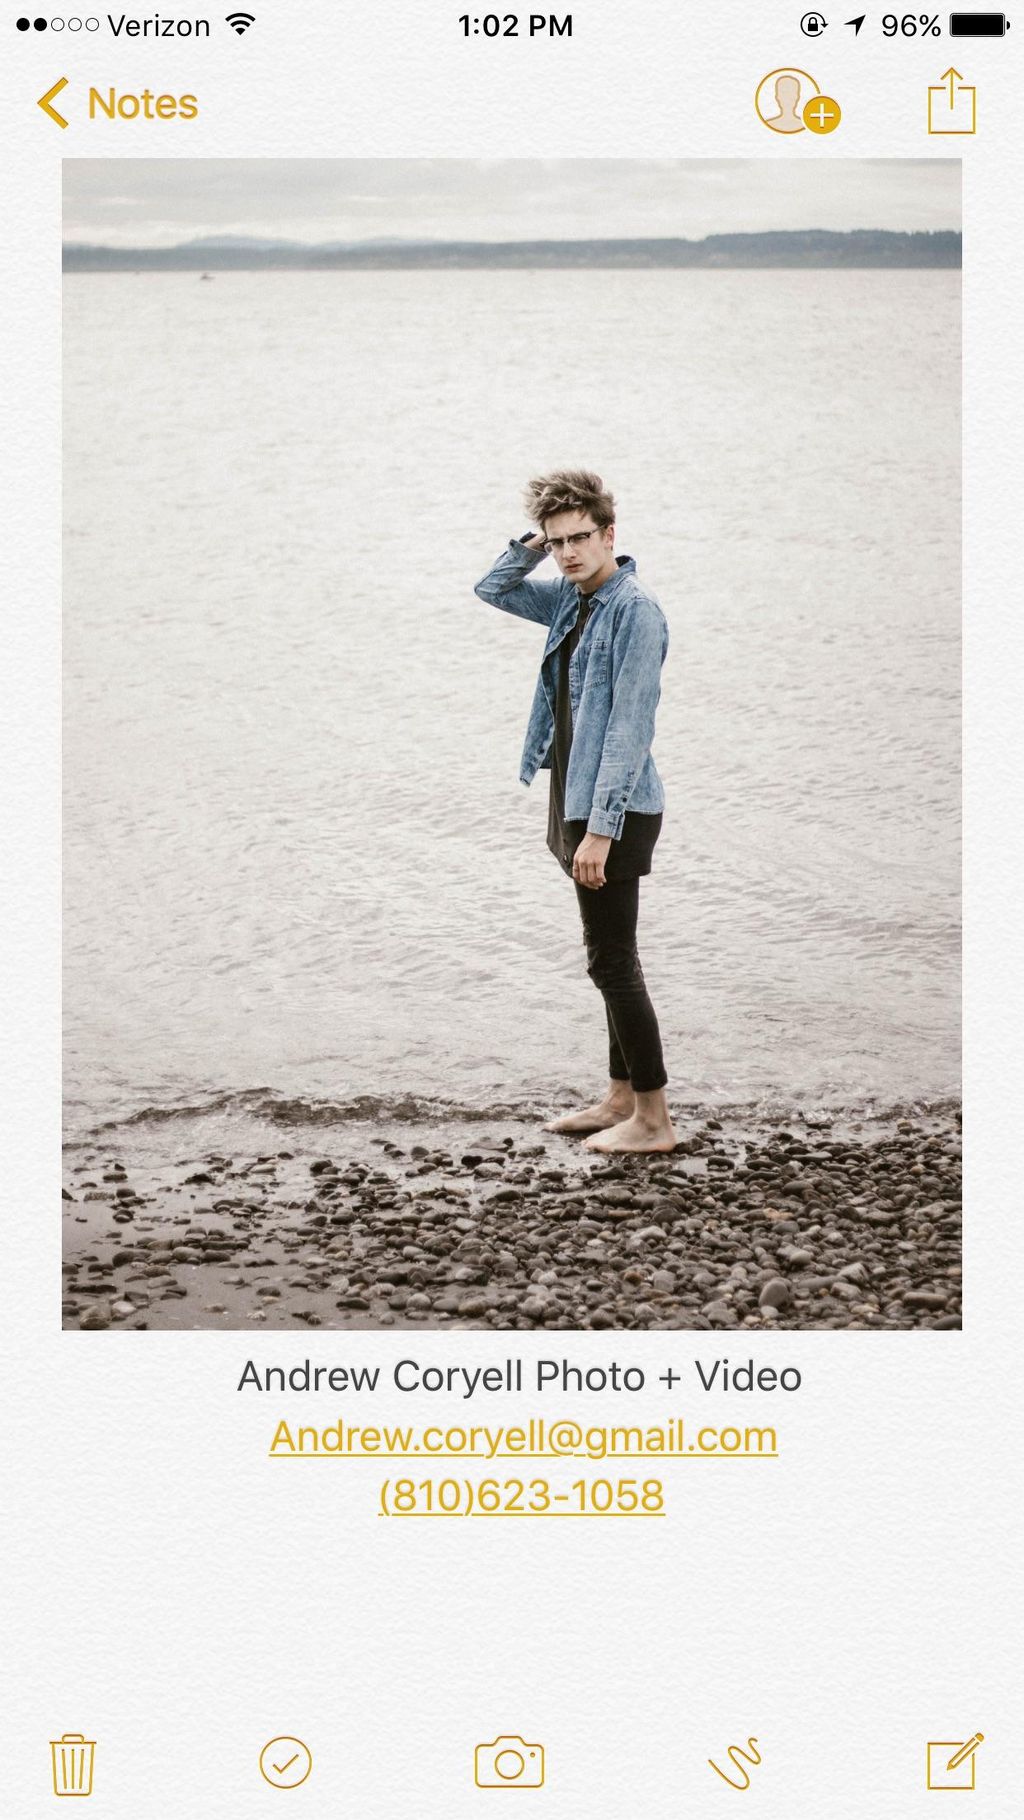 Andrew Coryell Photo + Video